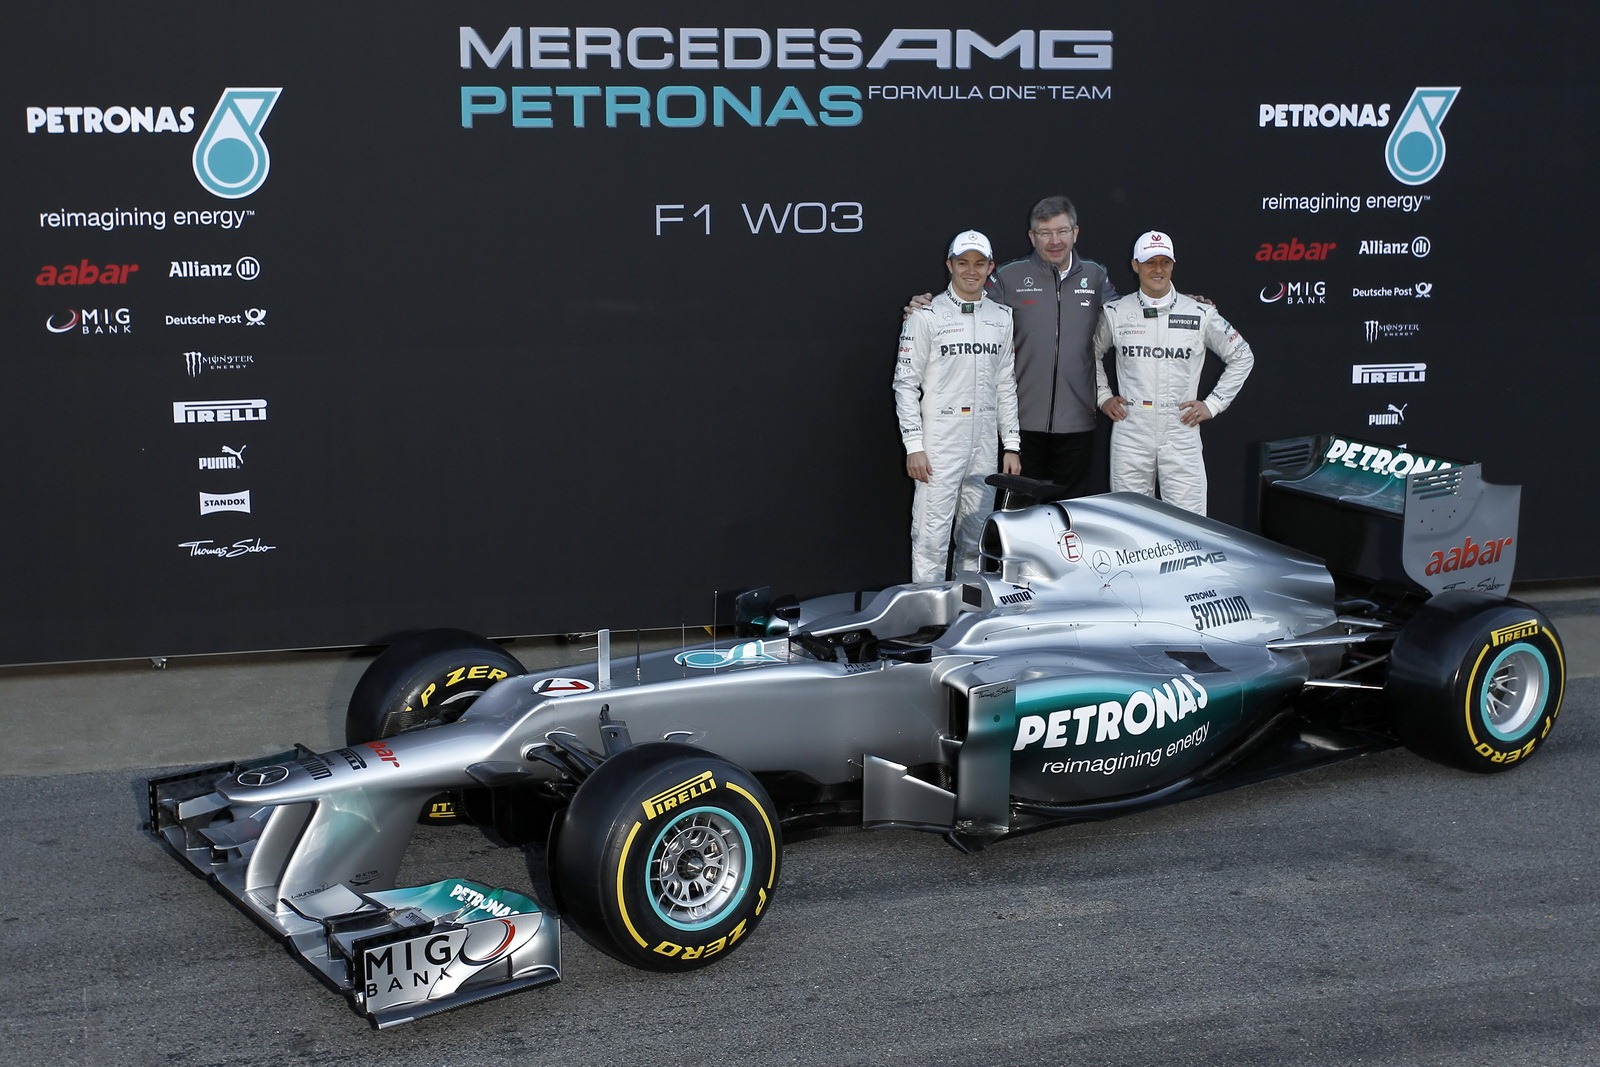 Mercedes amg petronas 2012 car